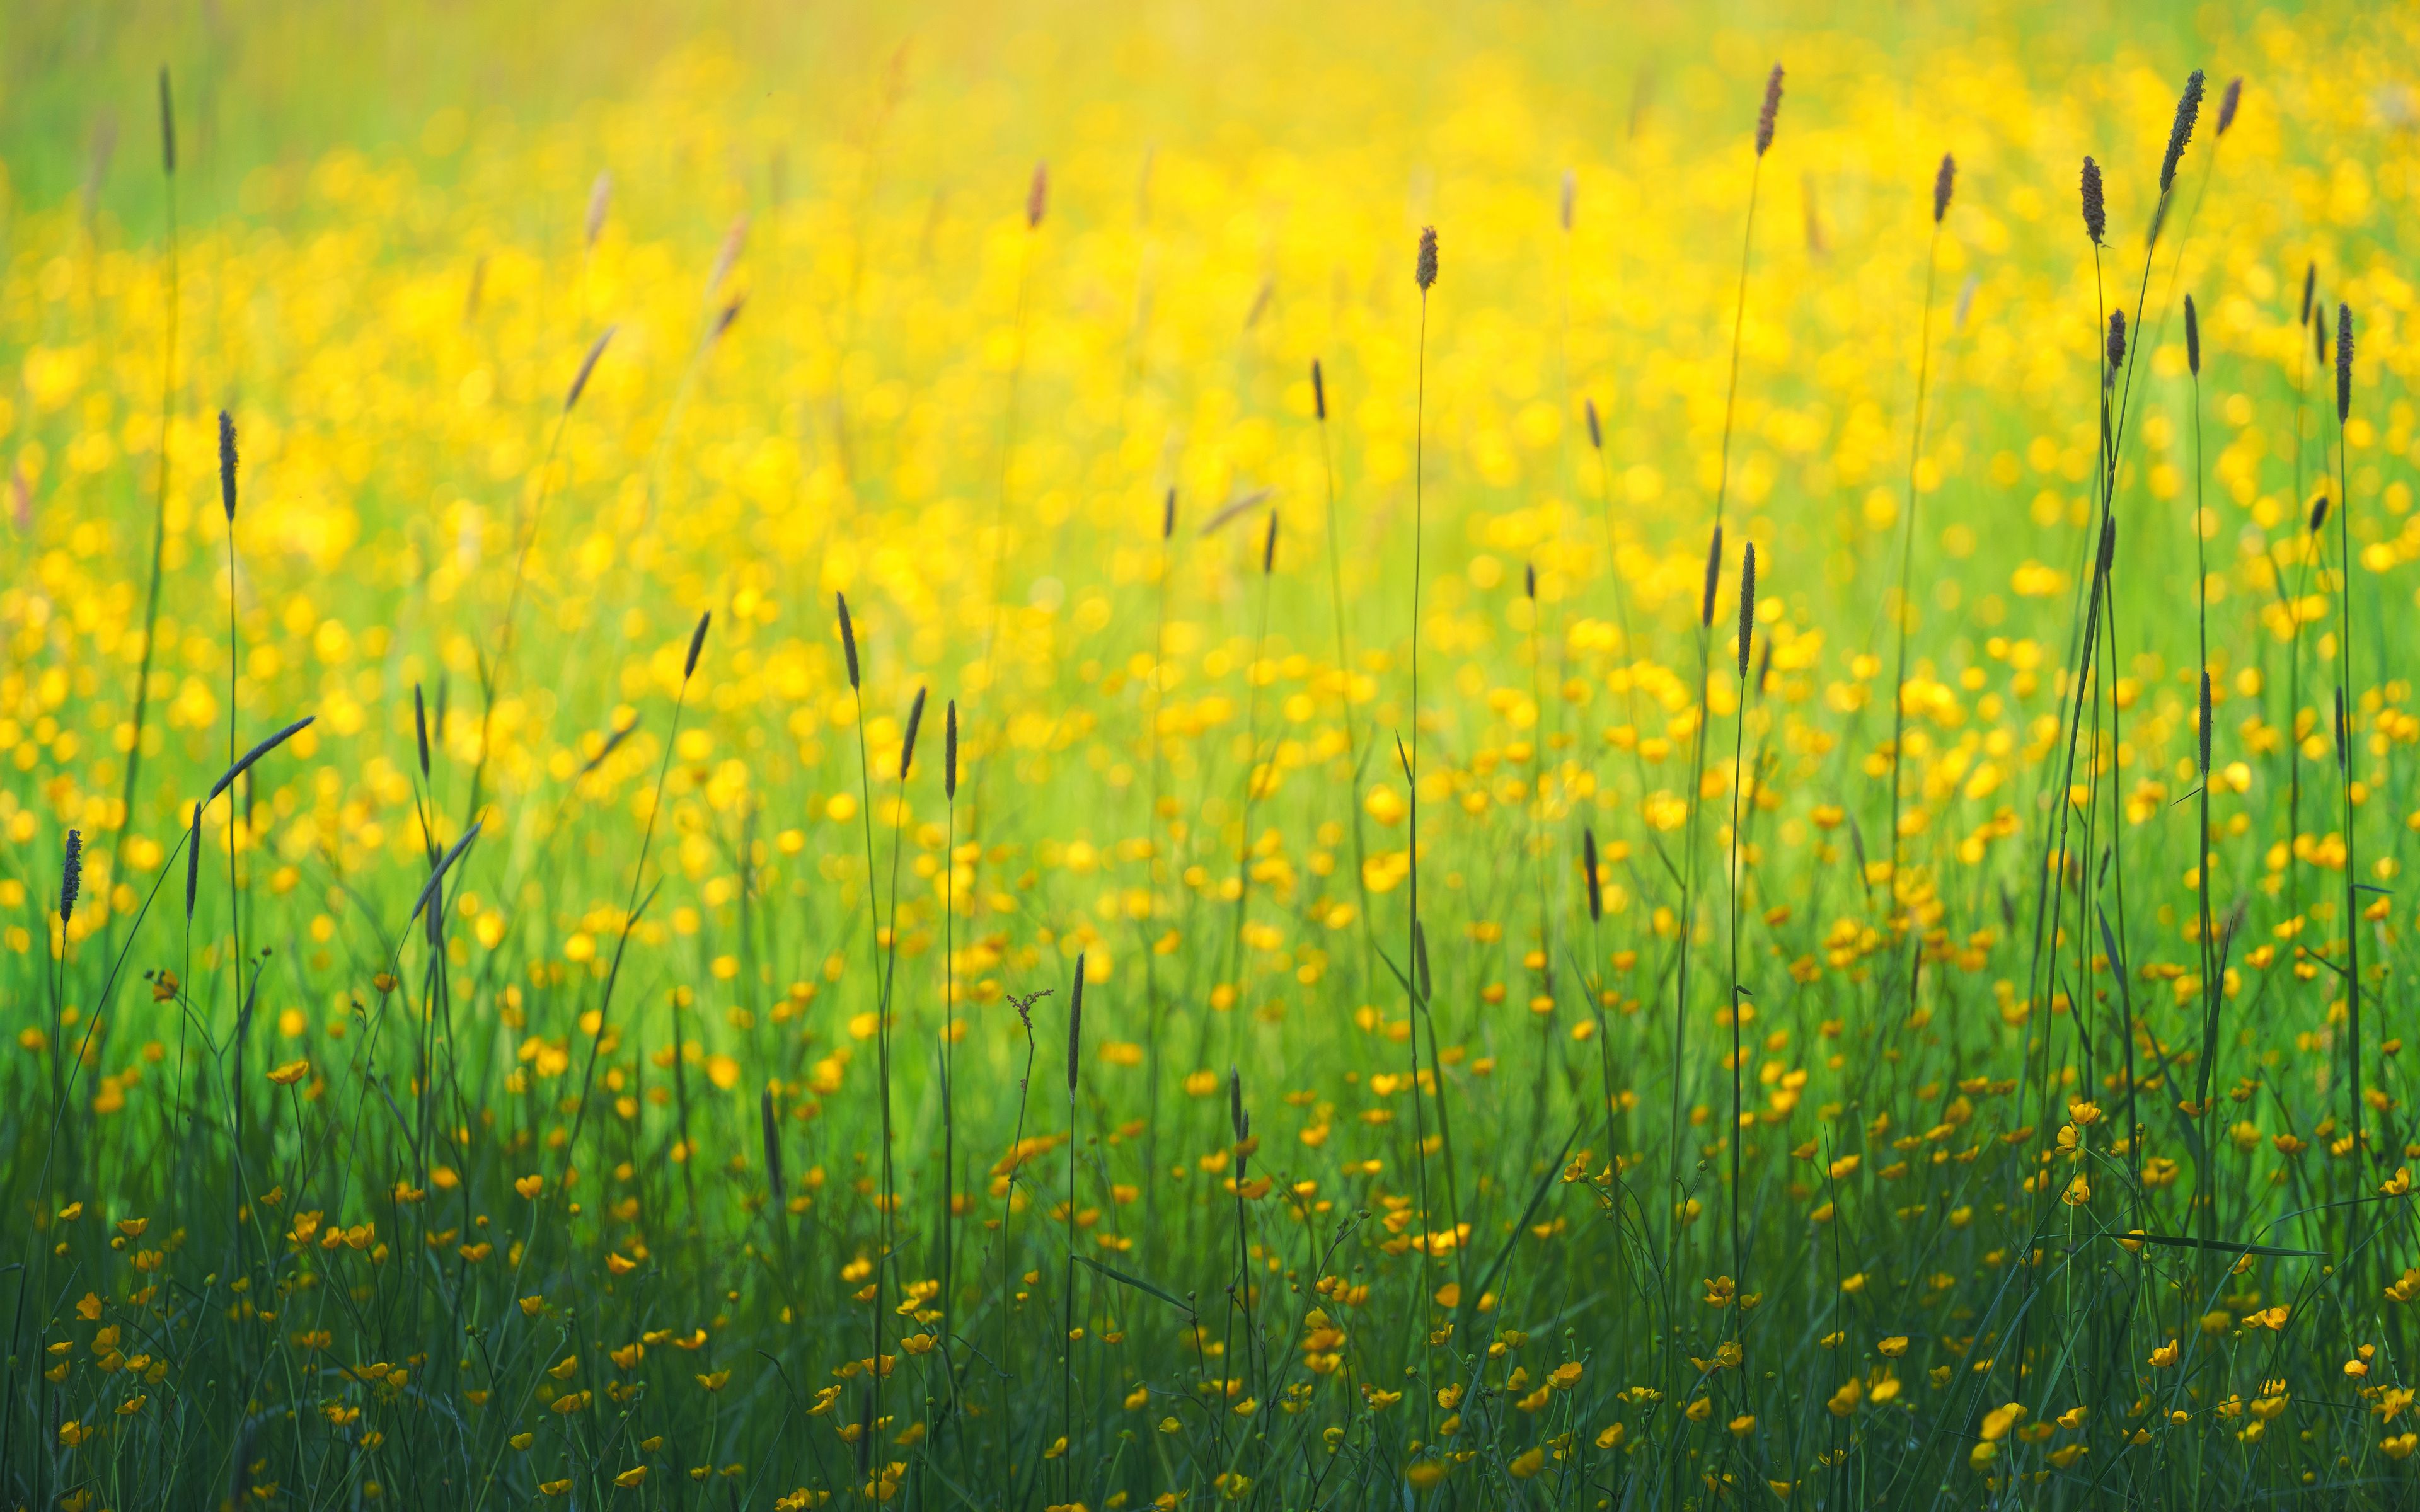 Download wallpaper 3840x2400 flowers, field, yellow, grass 4k ultra hd  16:10 hd background